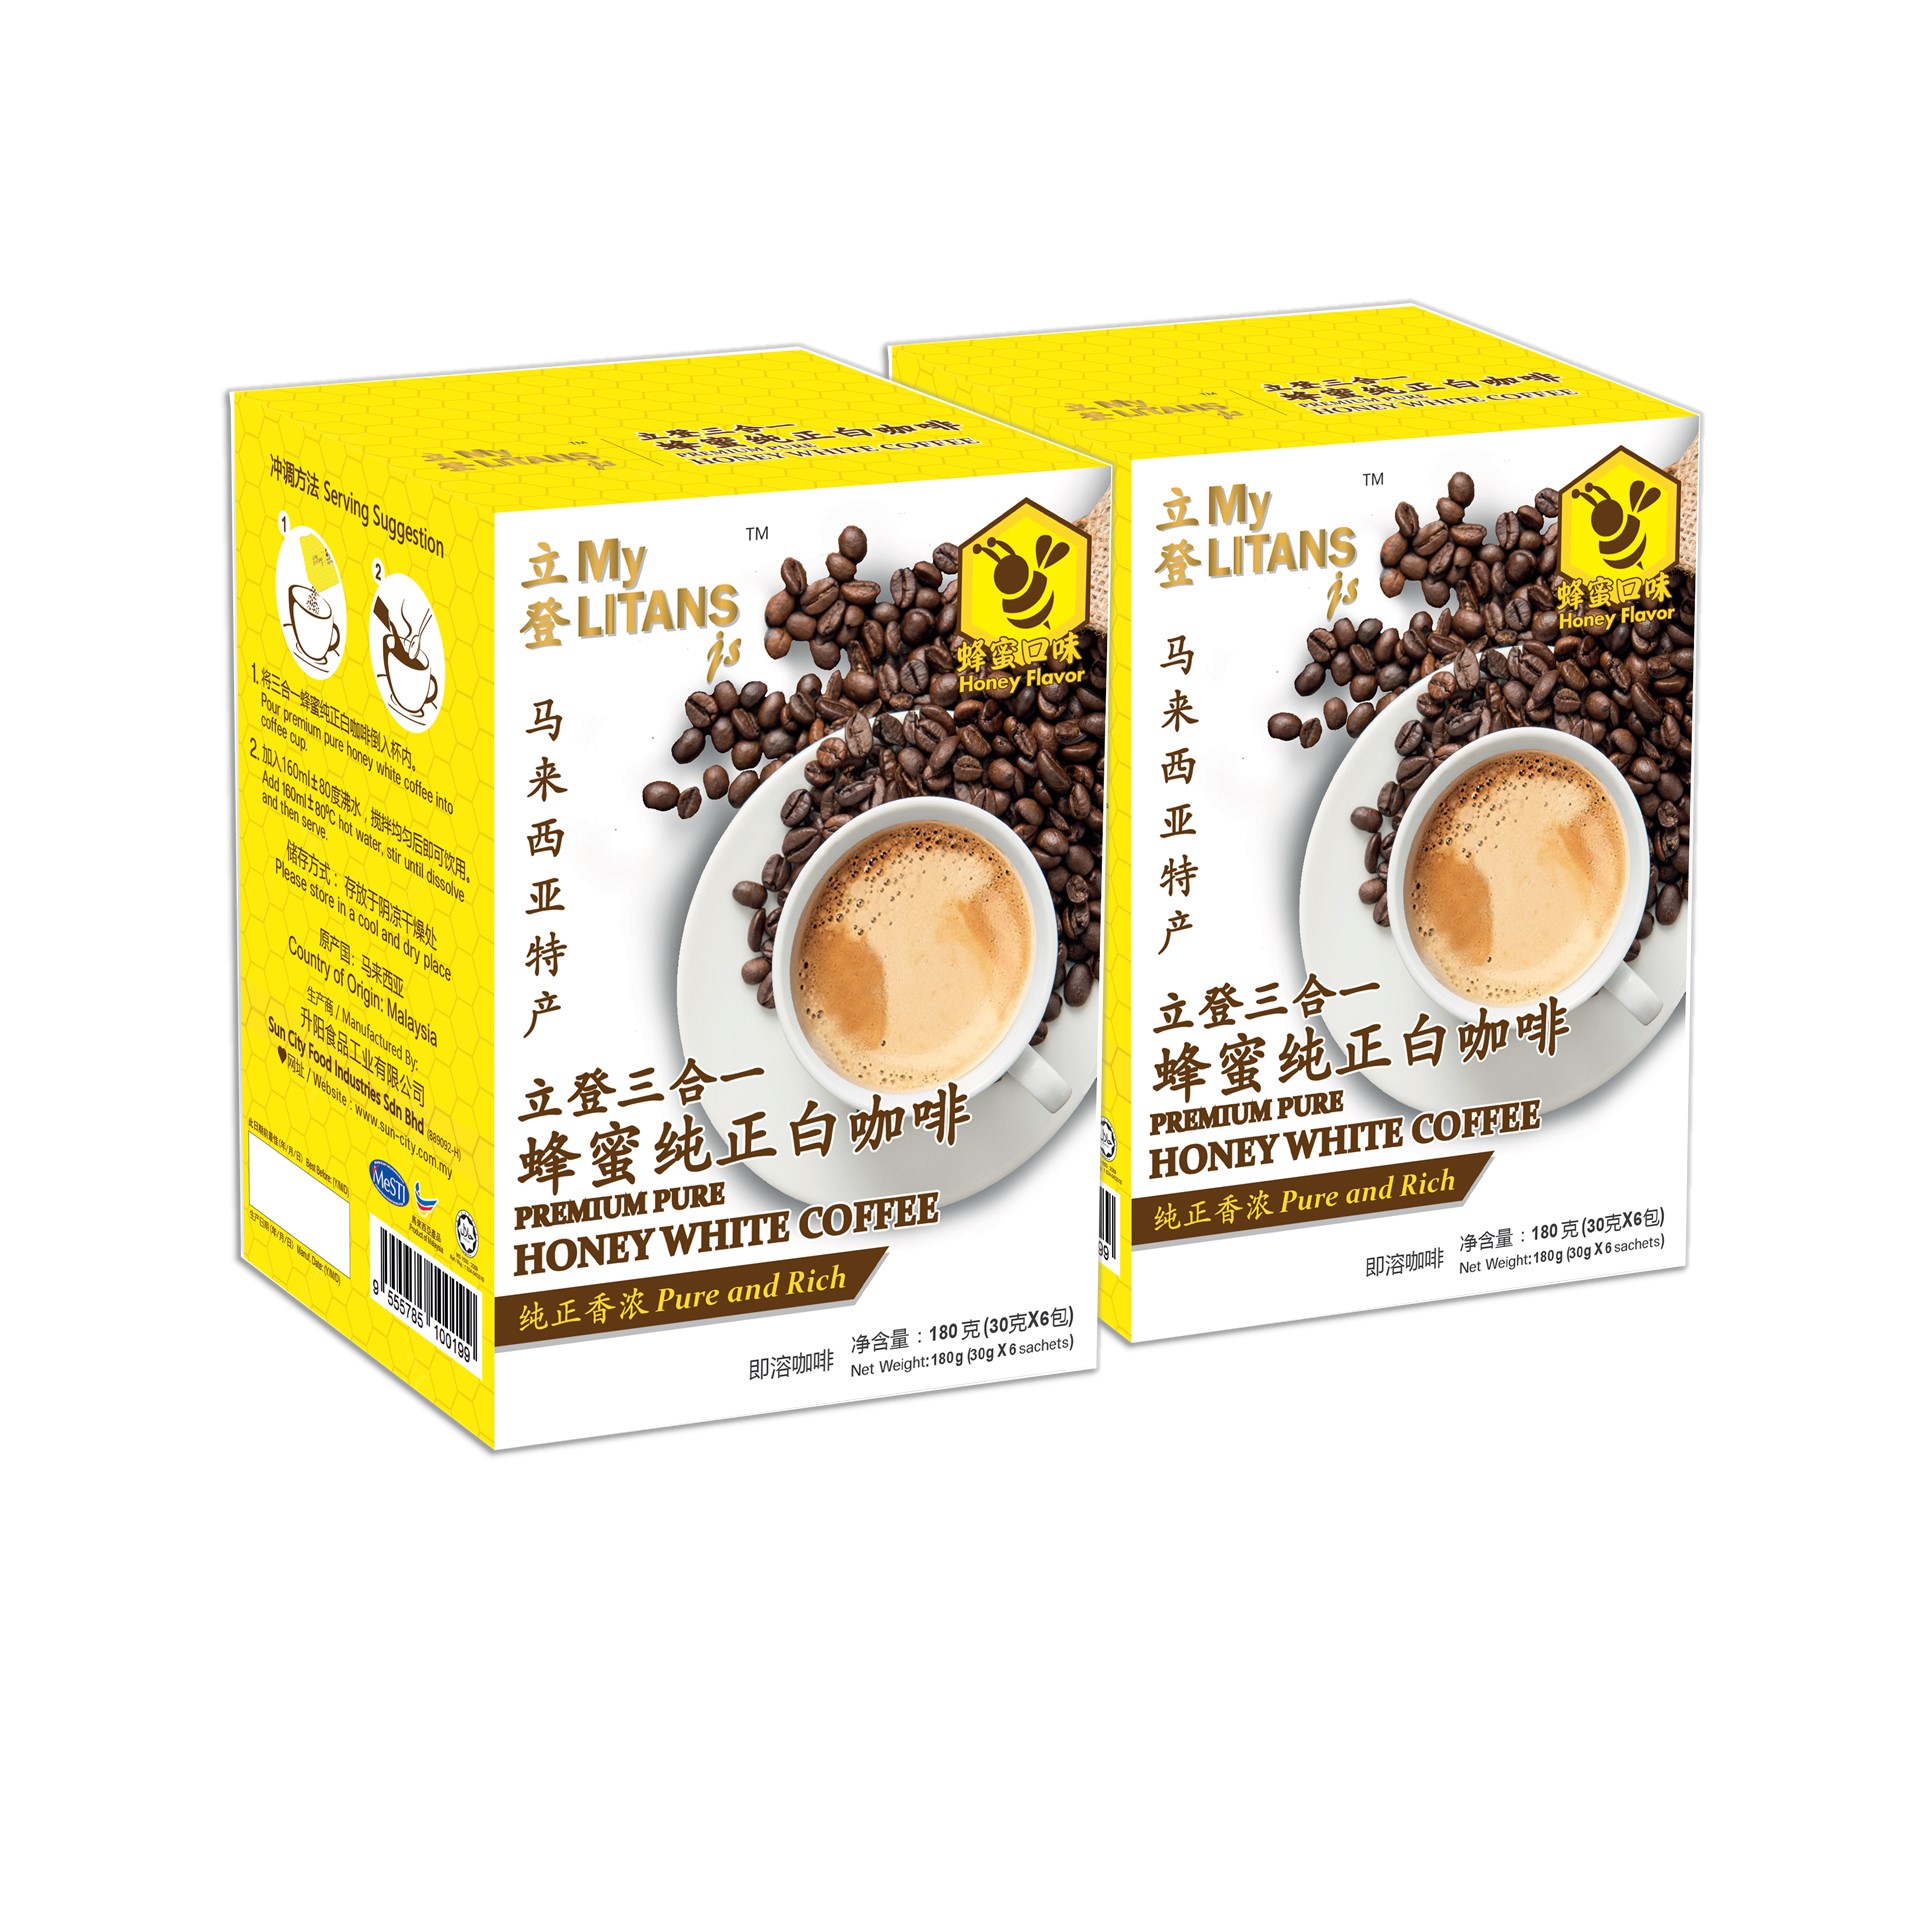 MyLITANSjs Premium Pure White Coffee Honey [2 box] (30 g x 6 sachects)